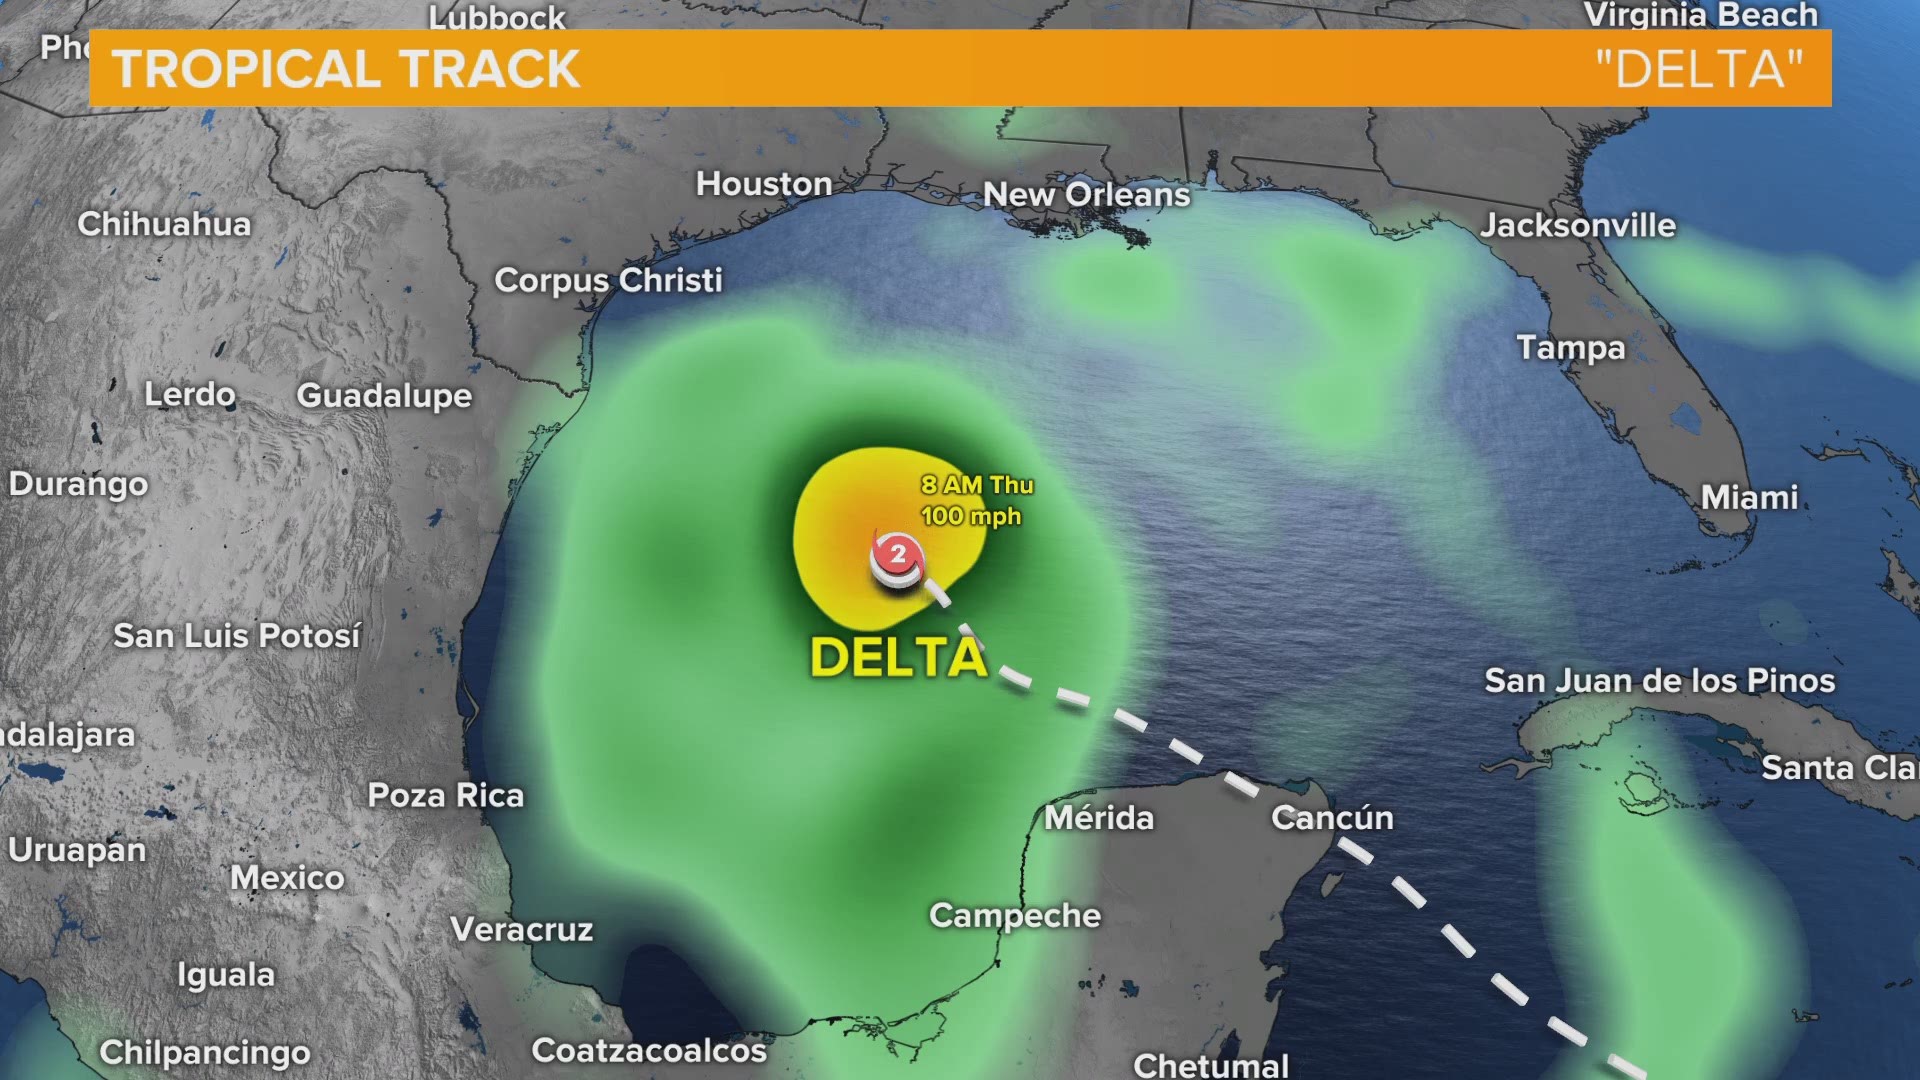 Delta makes landfall Friday afternoon and then tracks north.